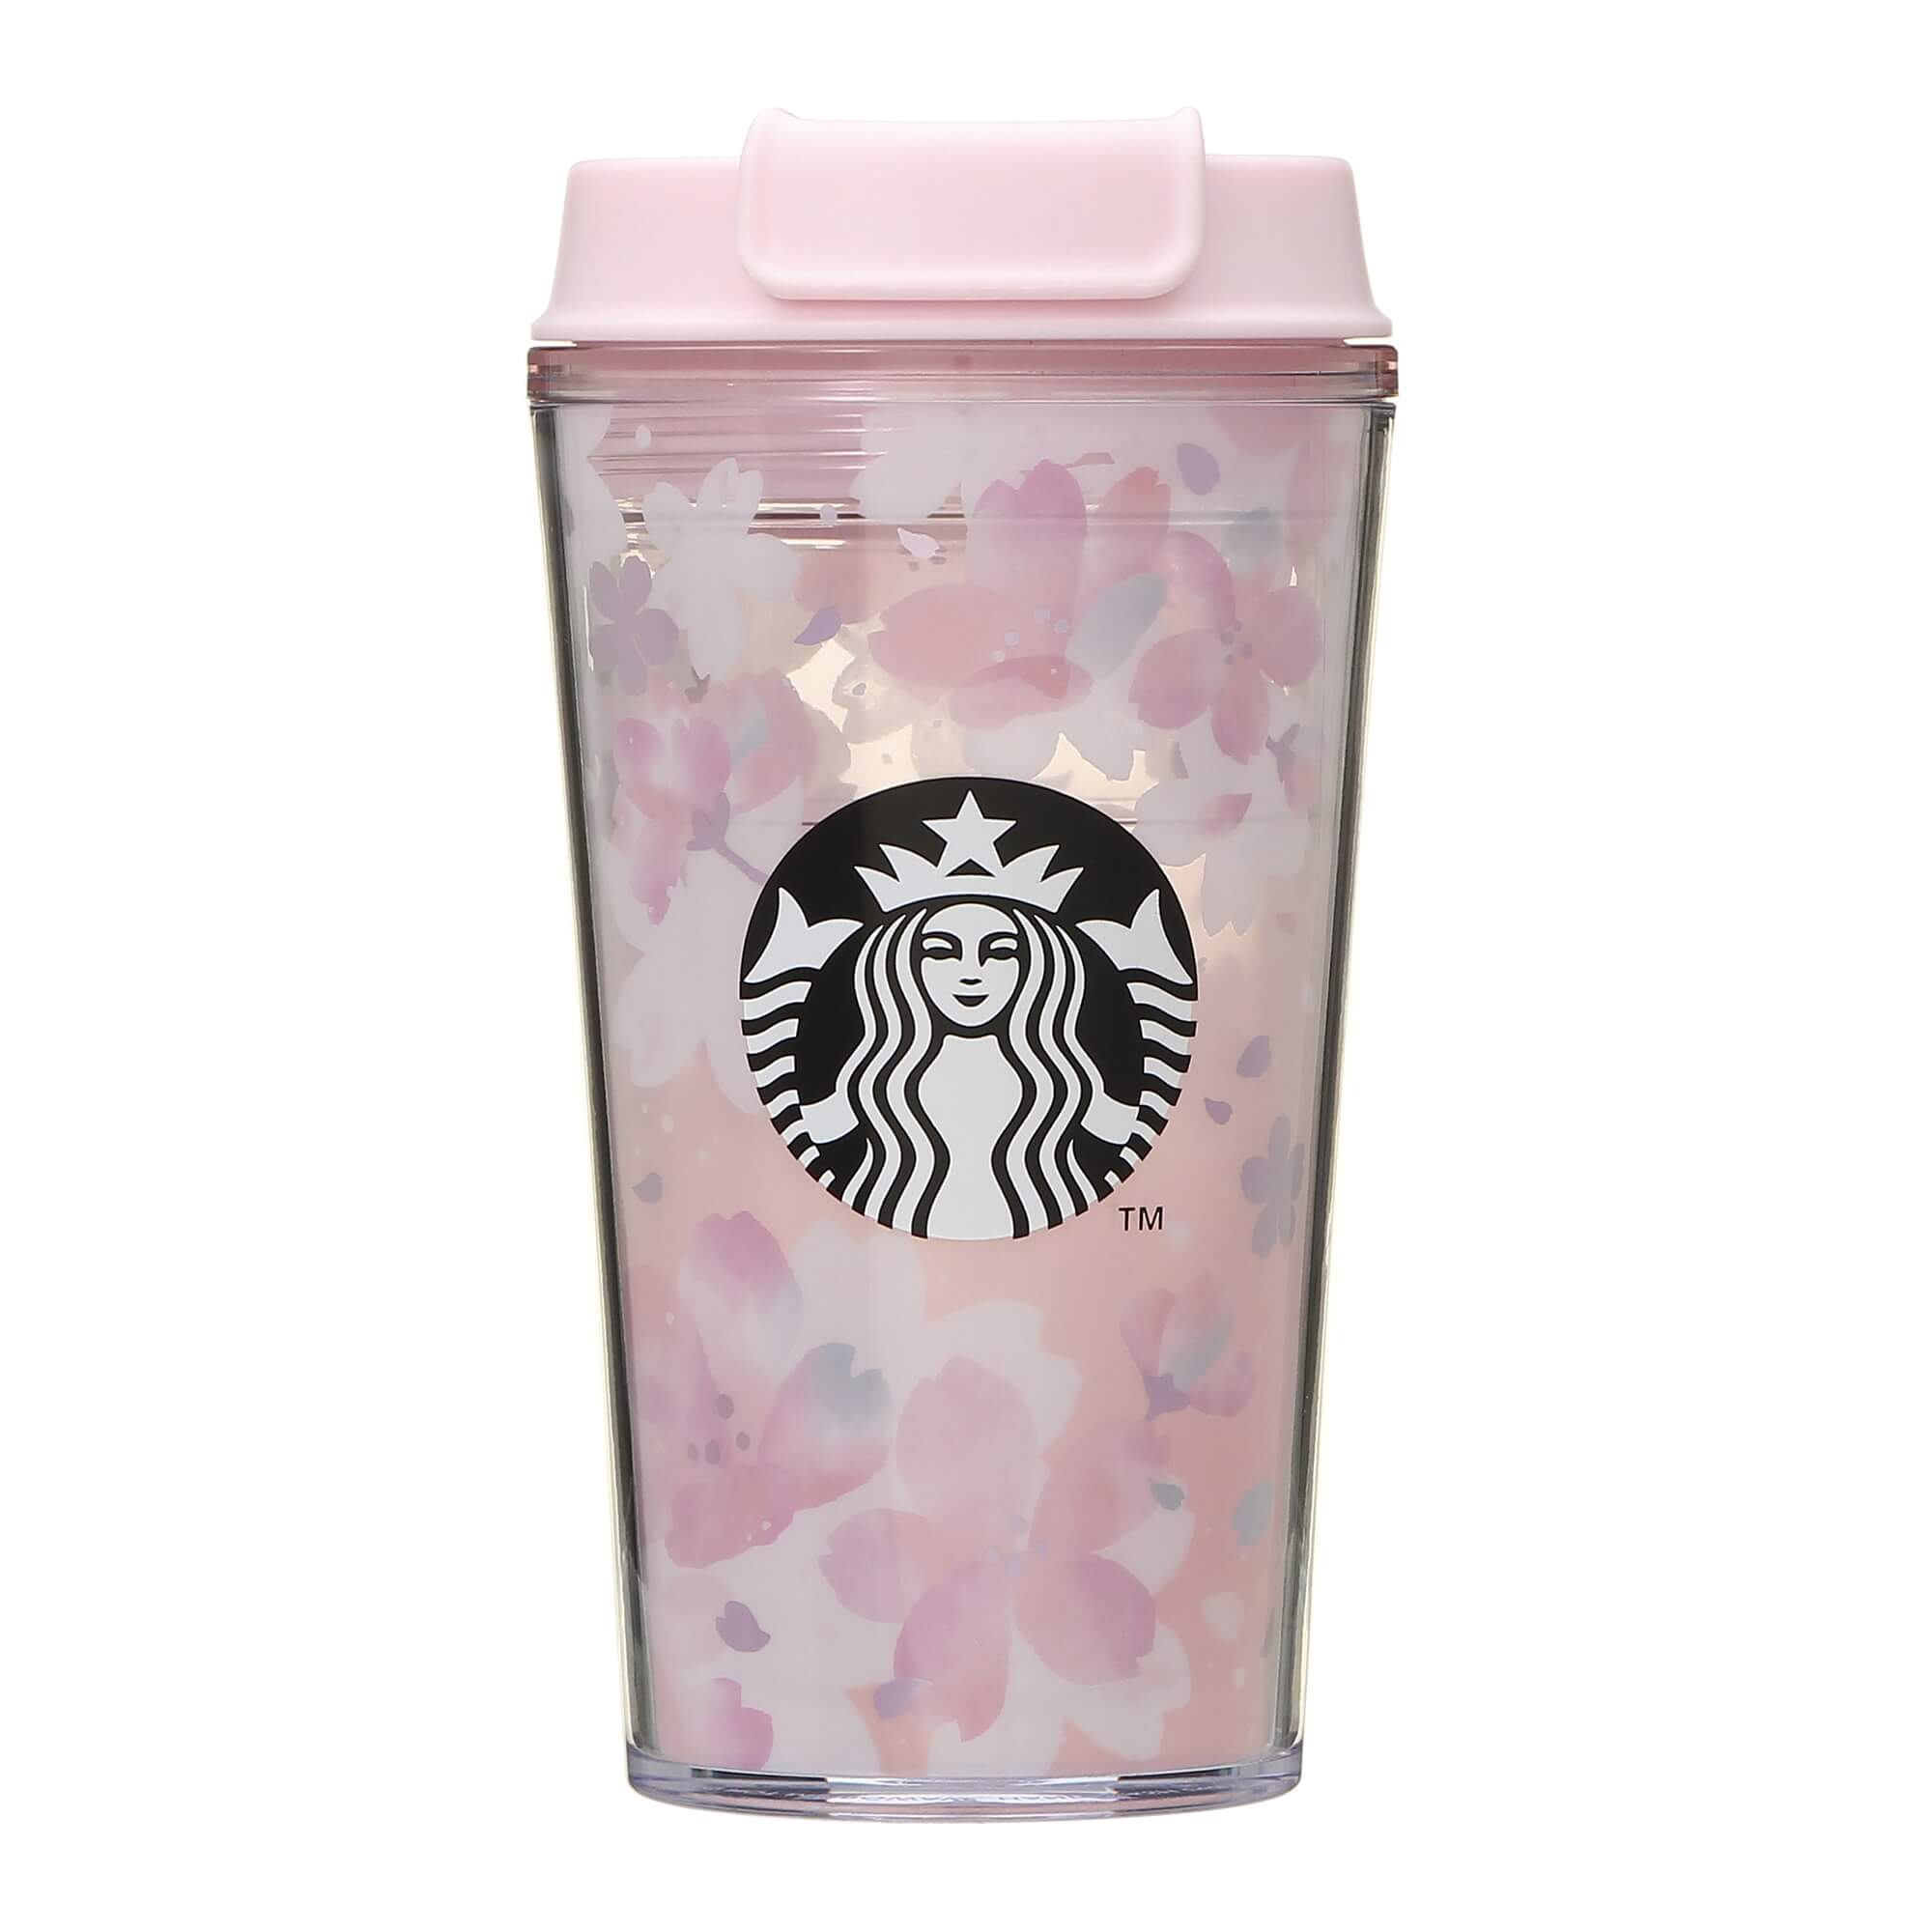 Starbucks Japan Original SAKURA 2021 Heat resistant glass pink 296ml 